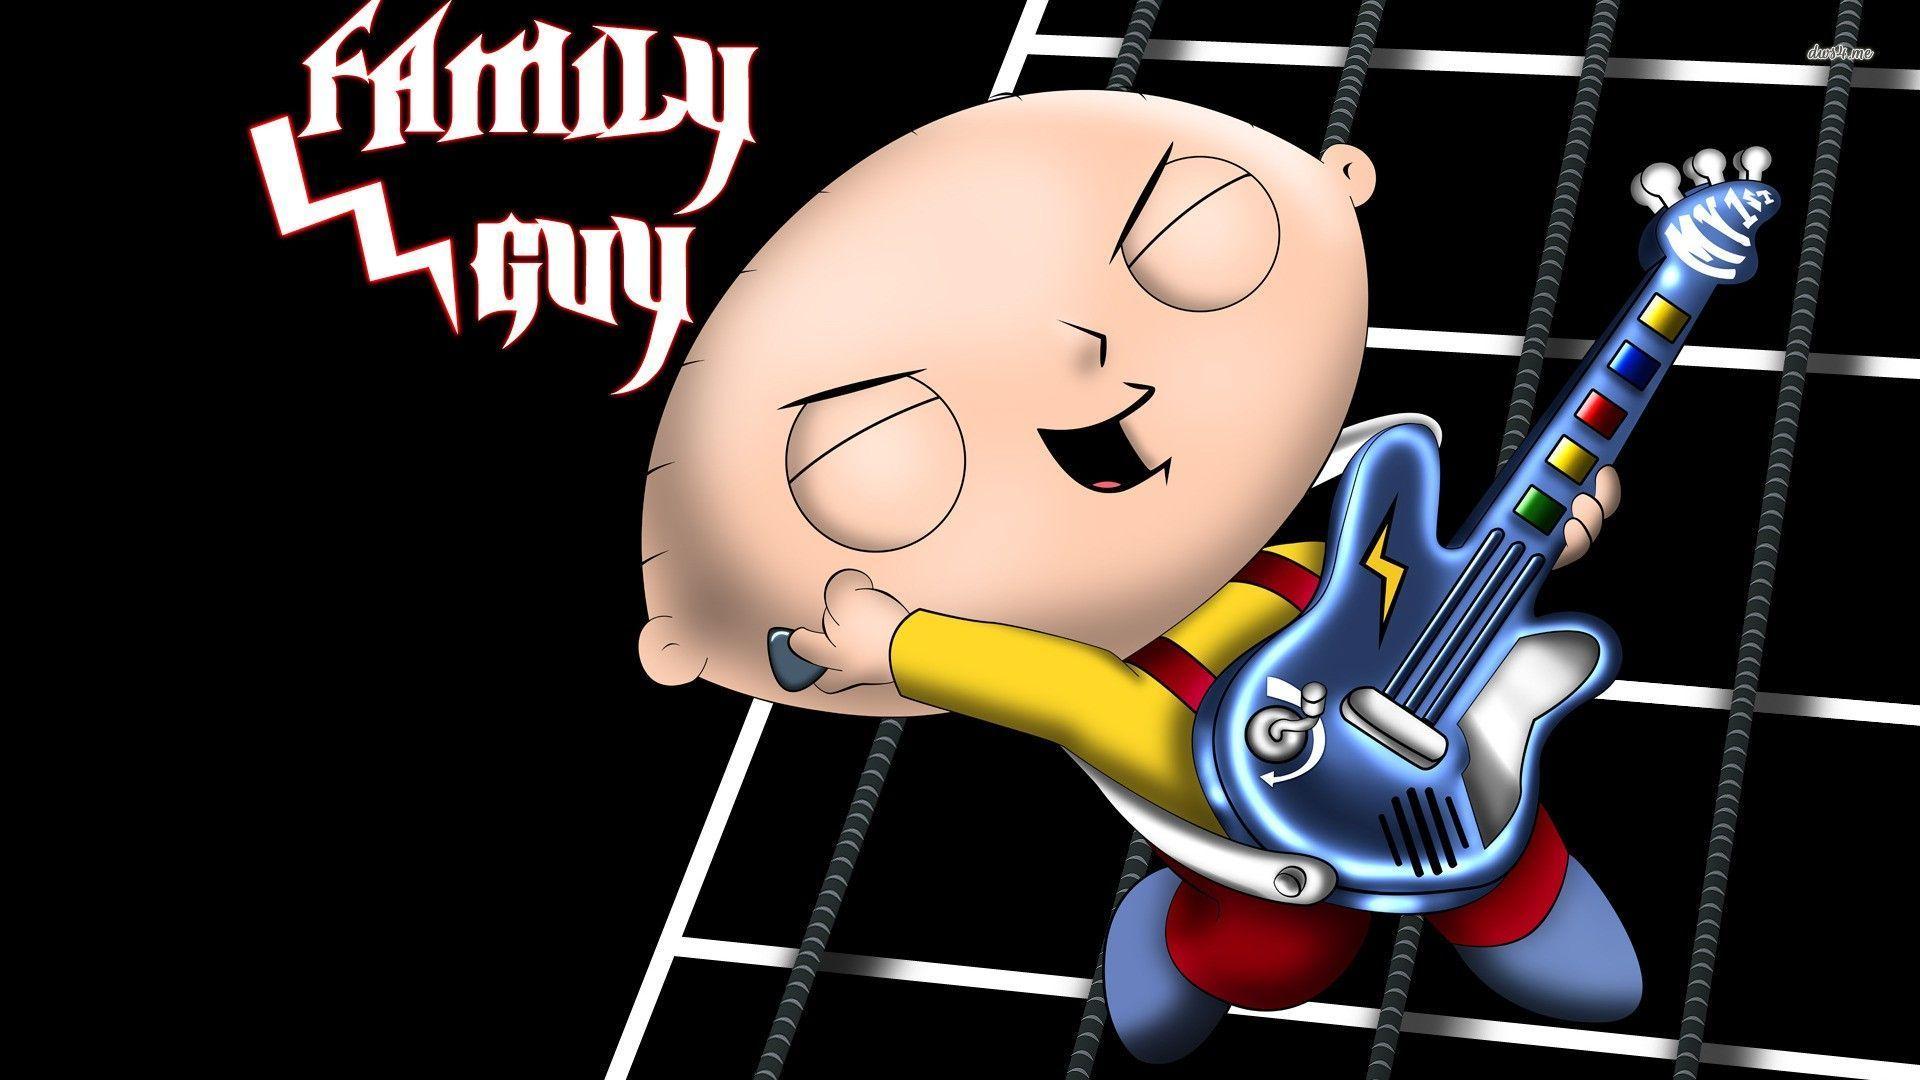 Family Guy: Guitar Hero HD Wallpaper. Download HD Wallpaper, High